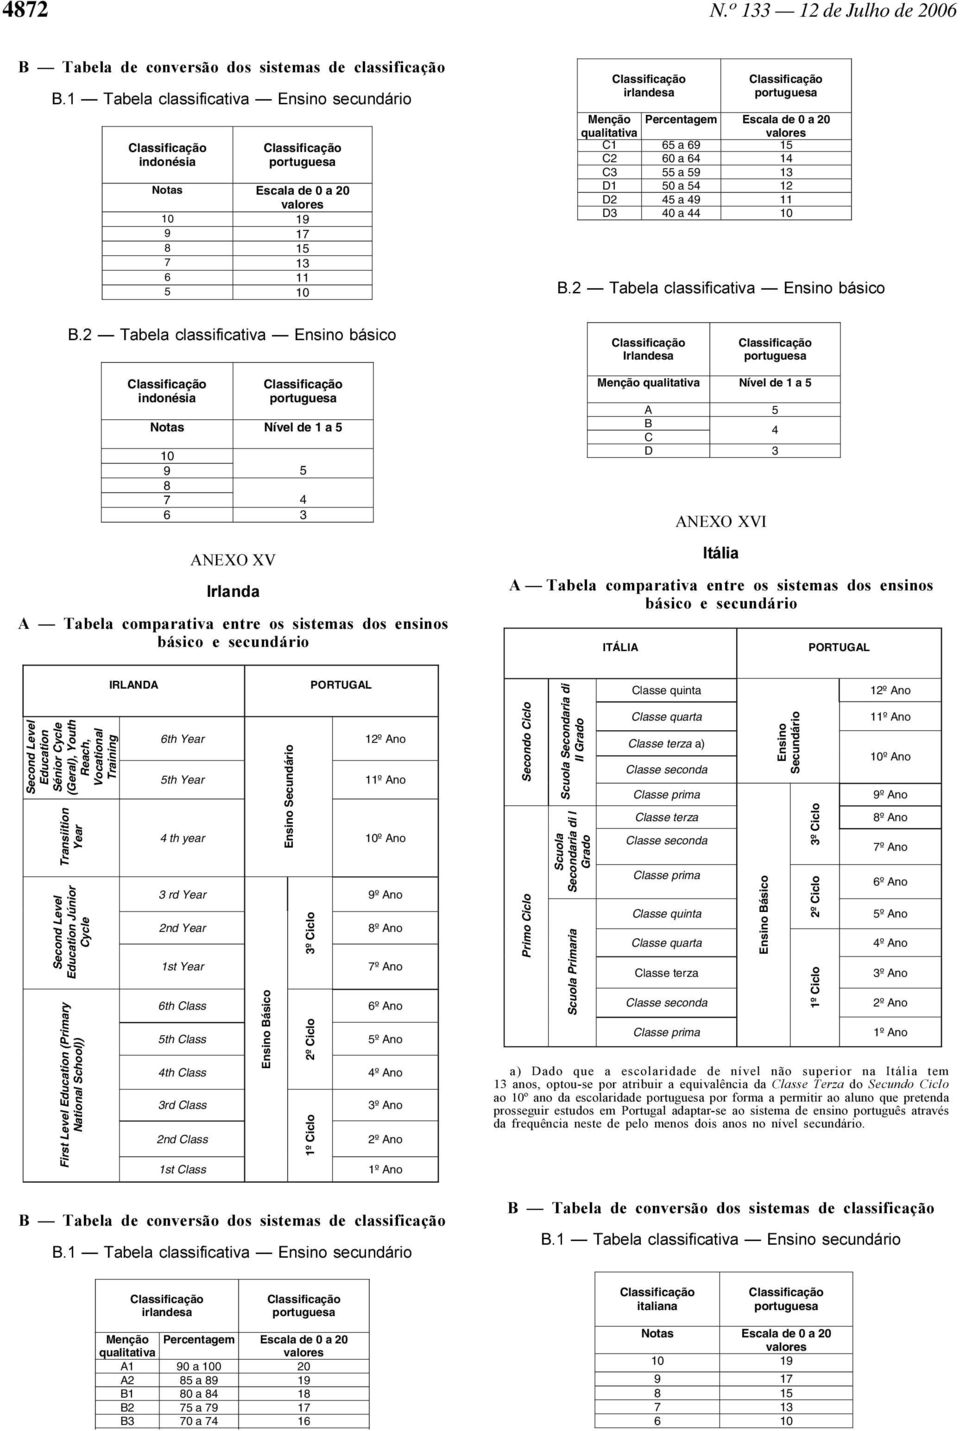 2 Tabela classificativa básico B.